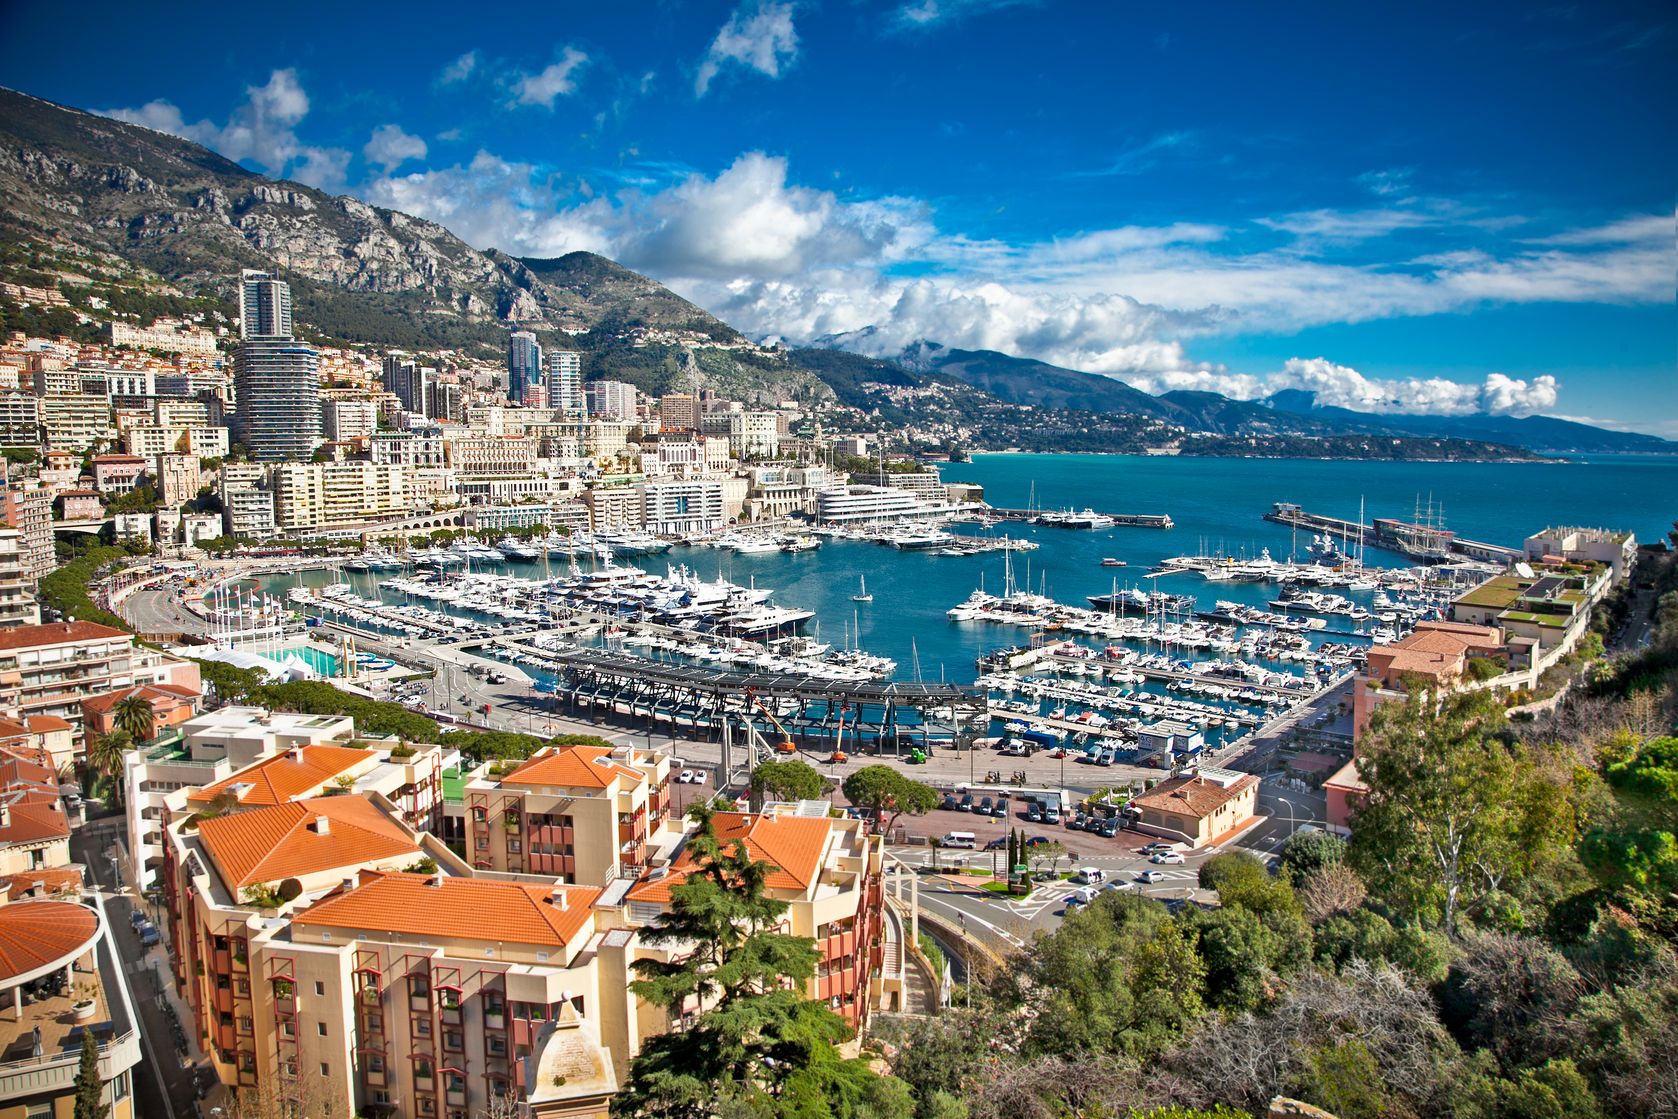 Panoramatický výhled na Monako | master2/123RF.com